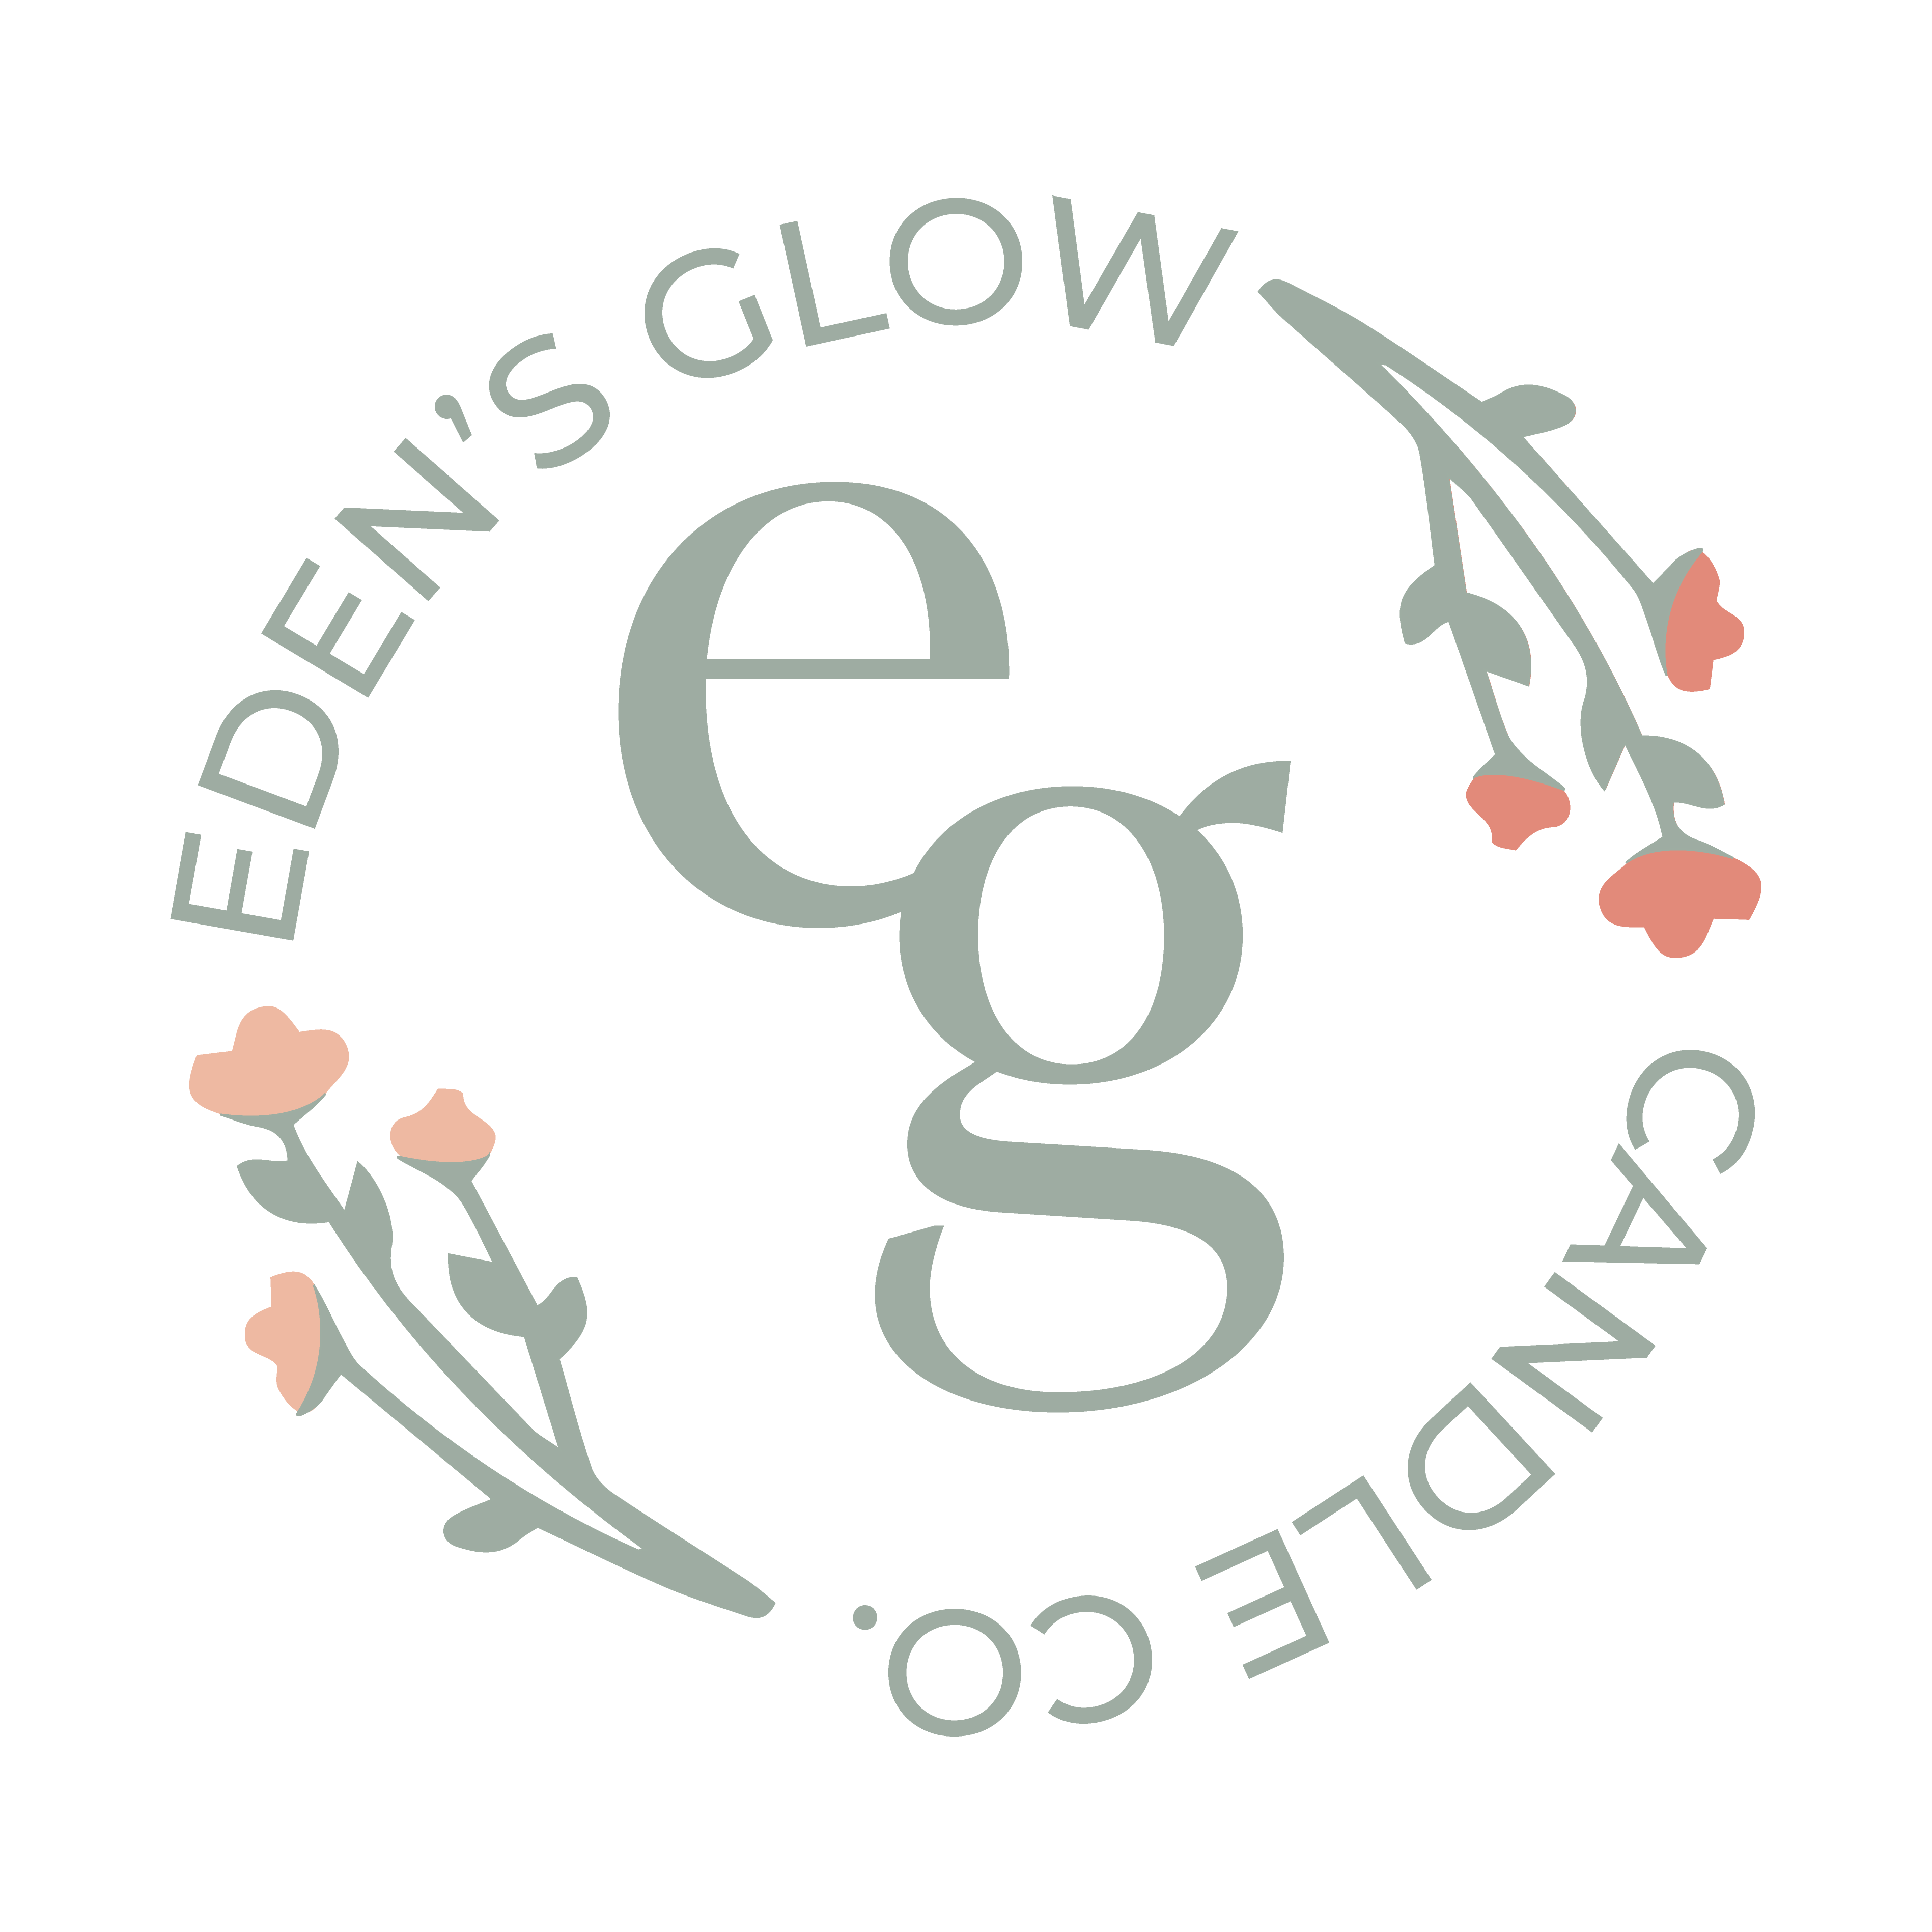 Advanced Glow Effects | Envato Tuts+